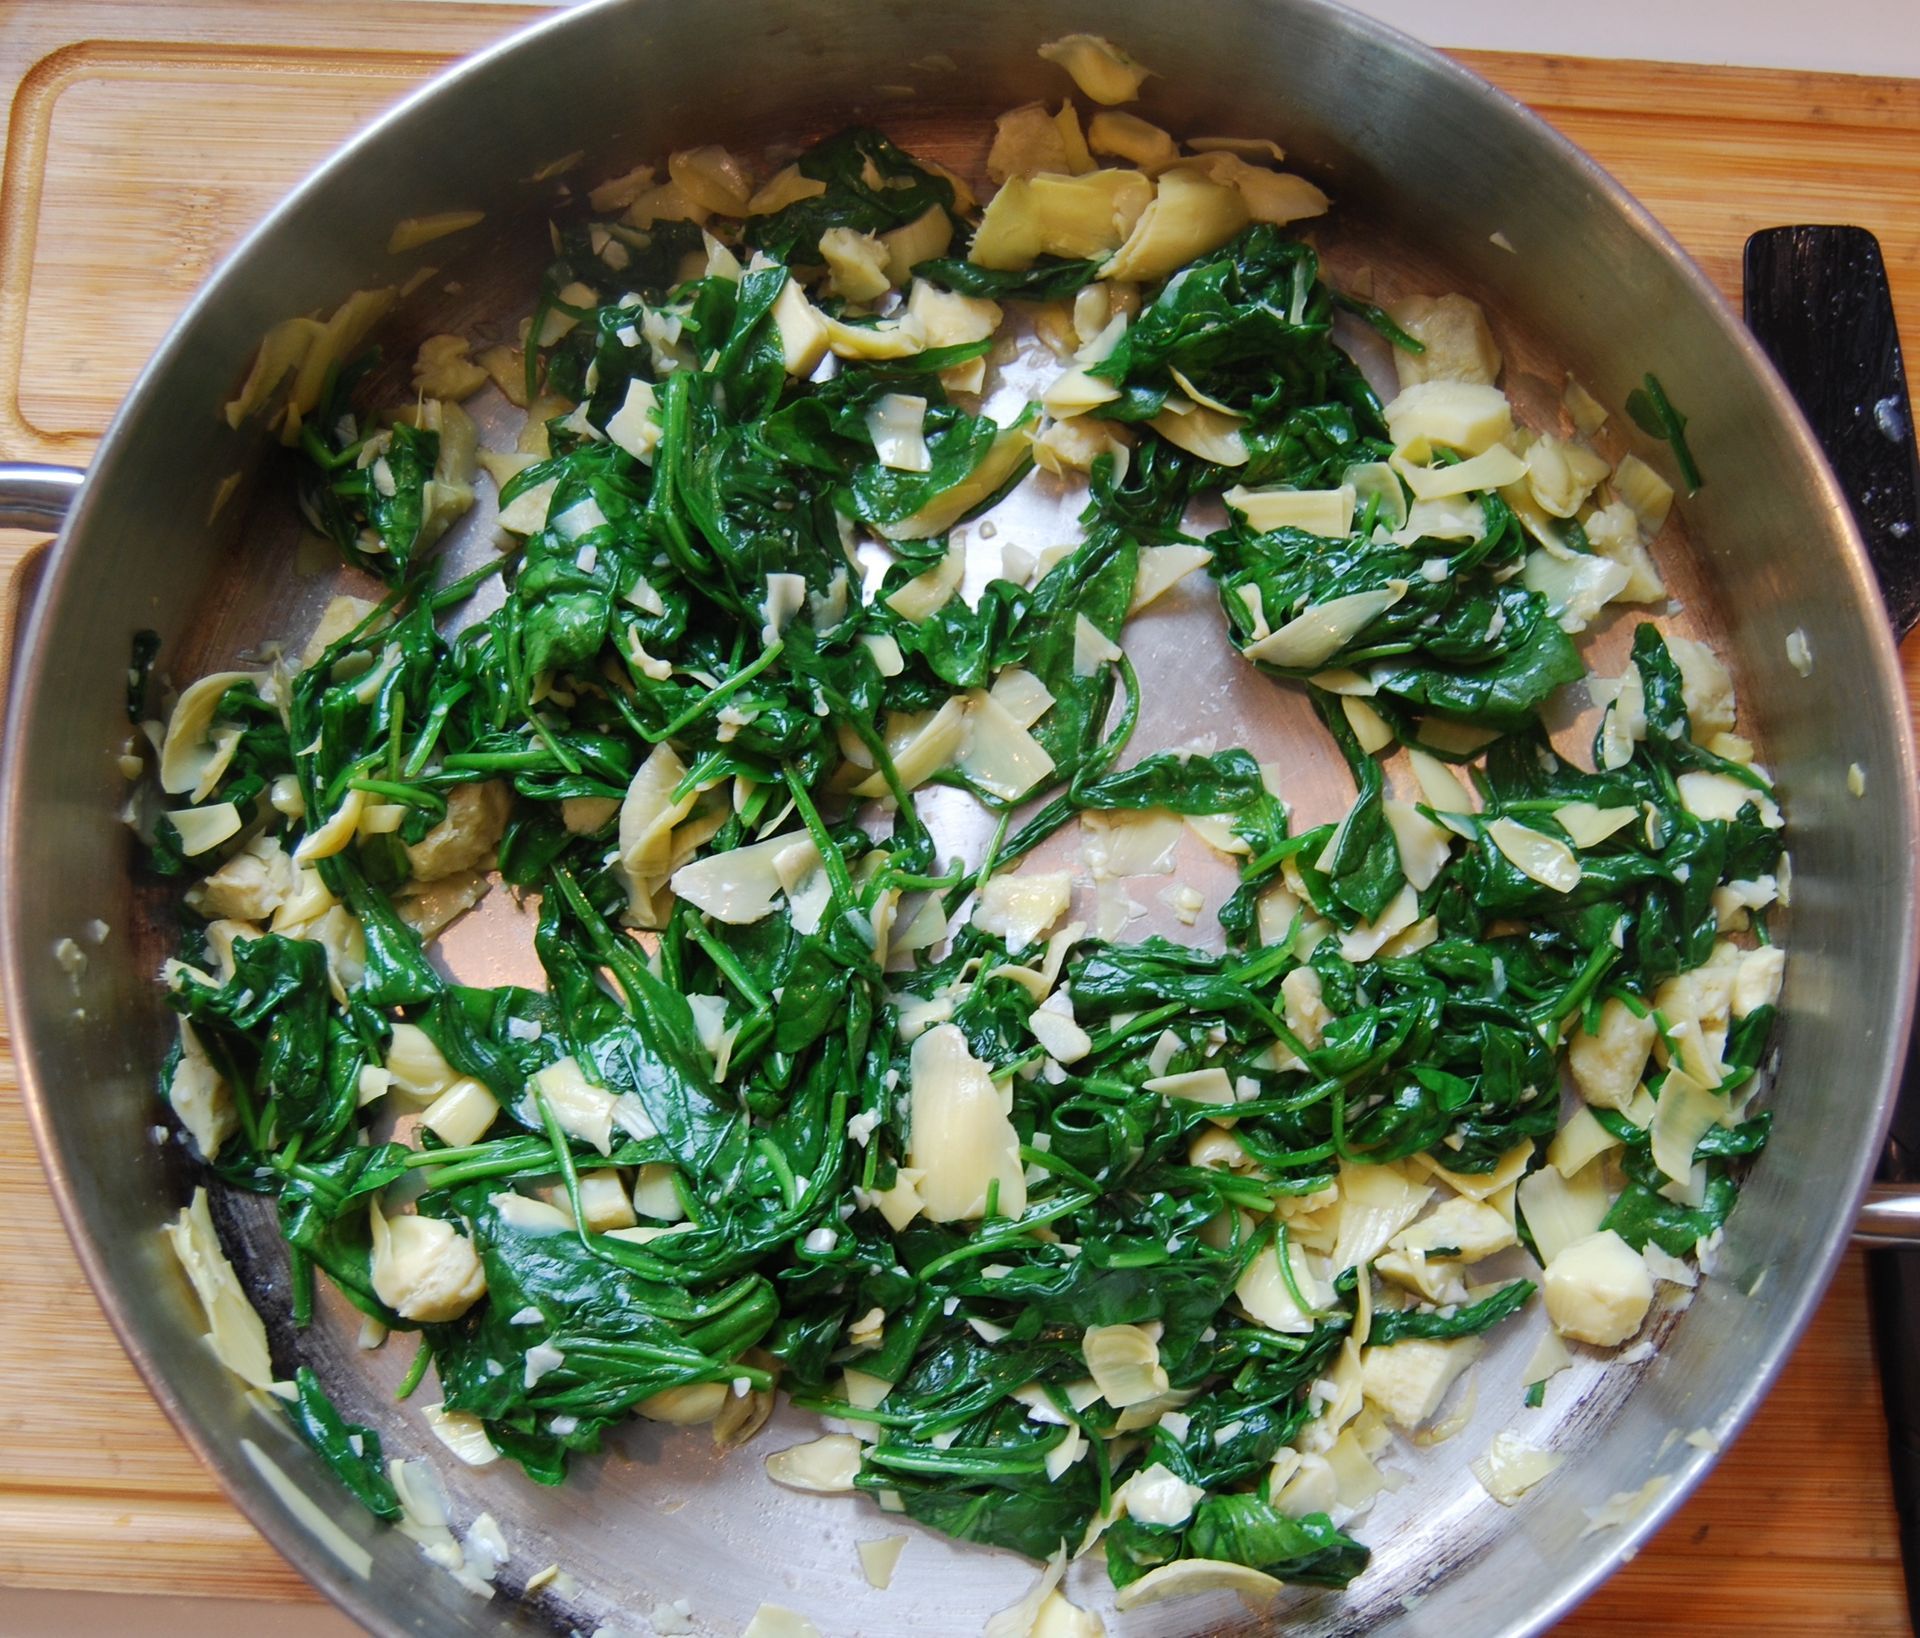 Sautéed garlic, artichoke hearts, and fresh spinach.